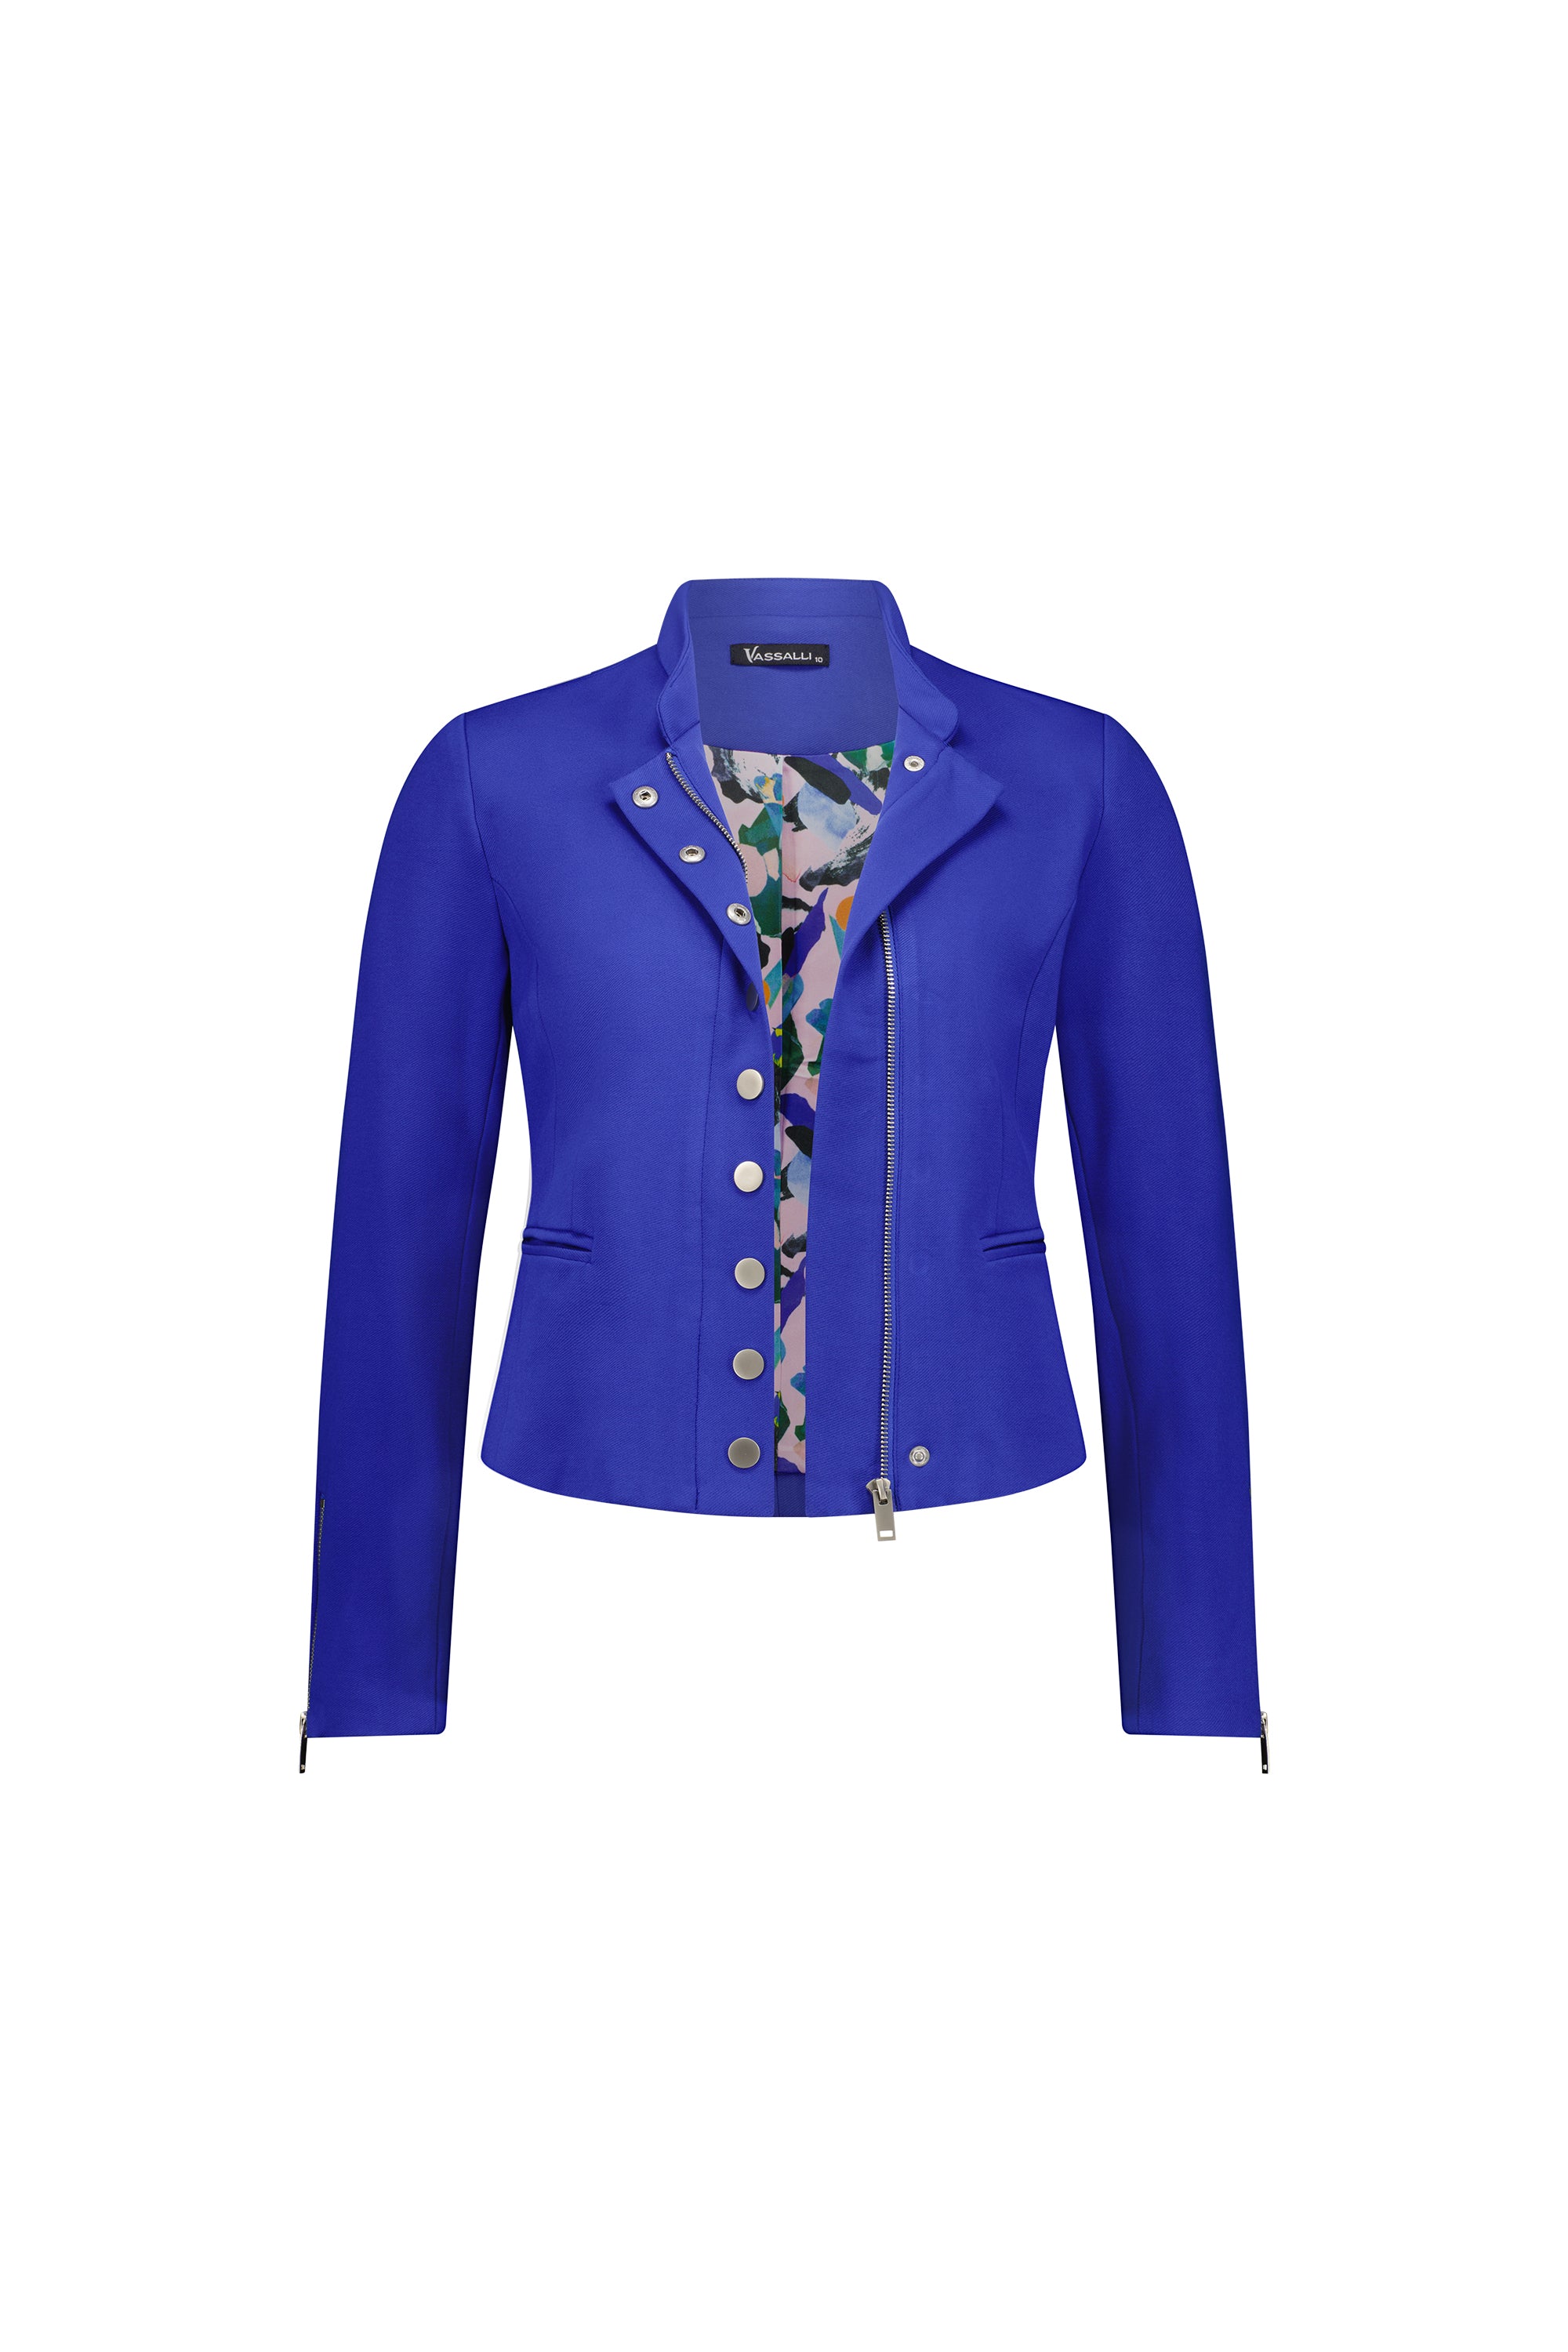 Vassalli Military Style Zip Up Jacket - Royal Blue